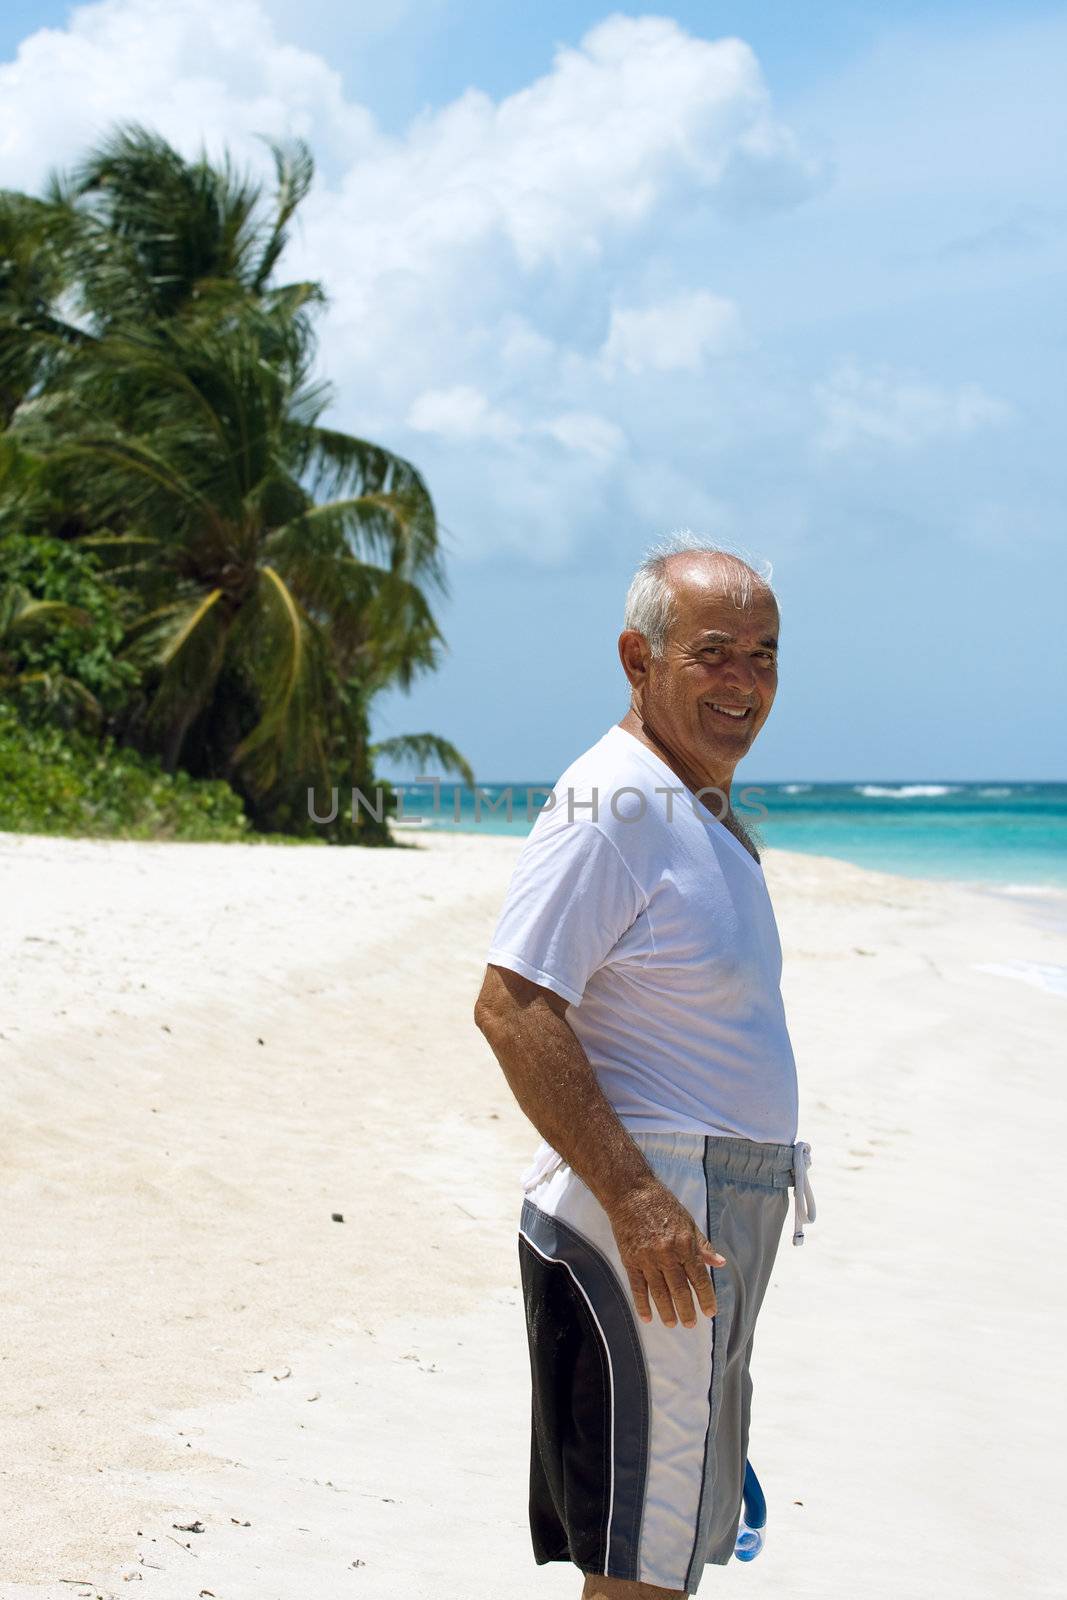 A older Hispanic senior citizen man standing on a tropical beach in the Caribbean.